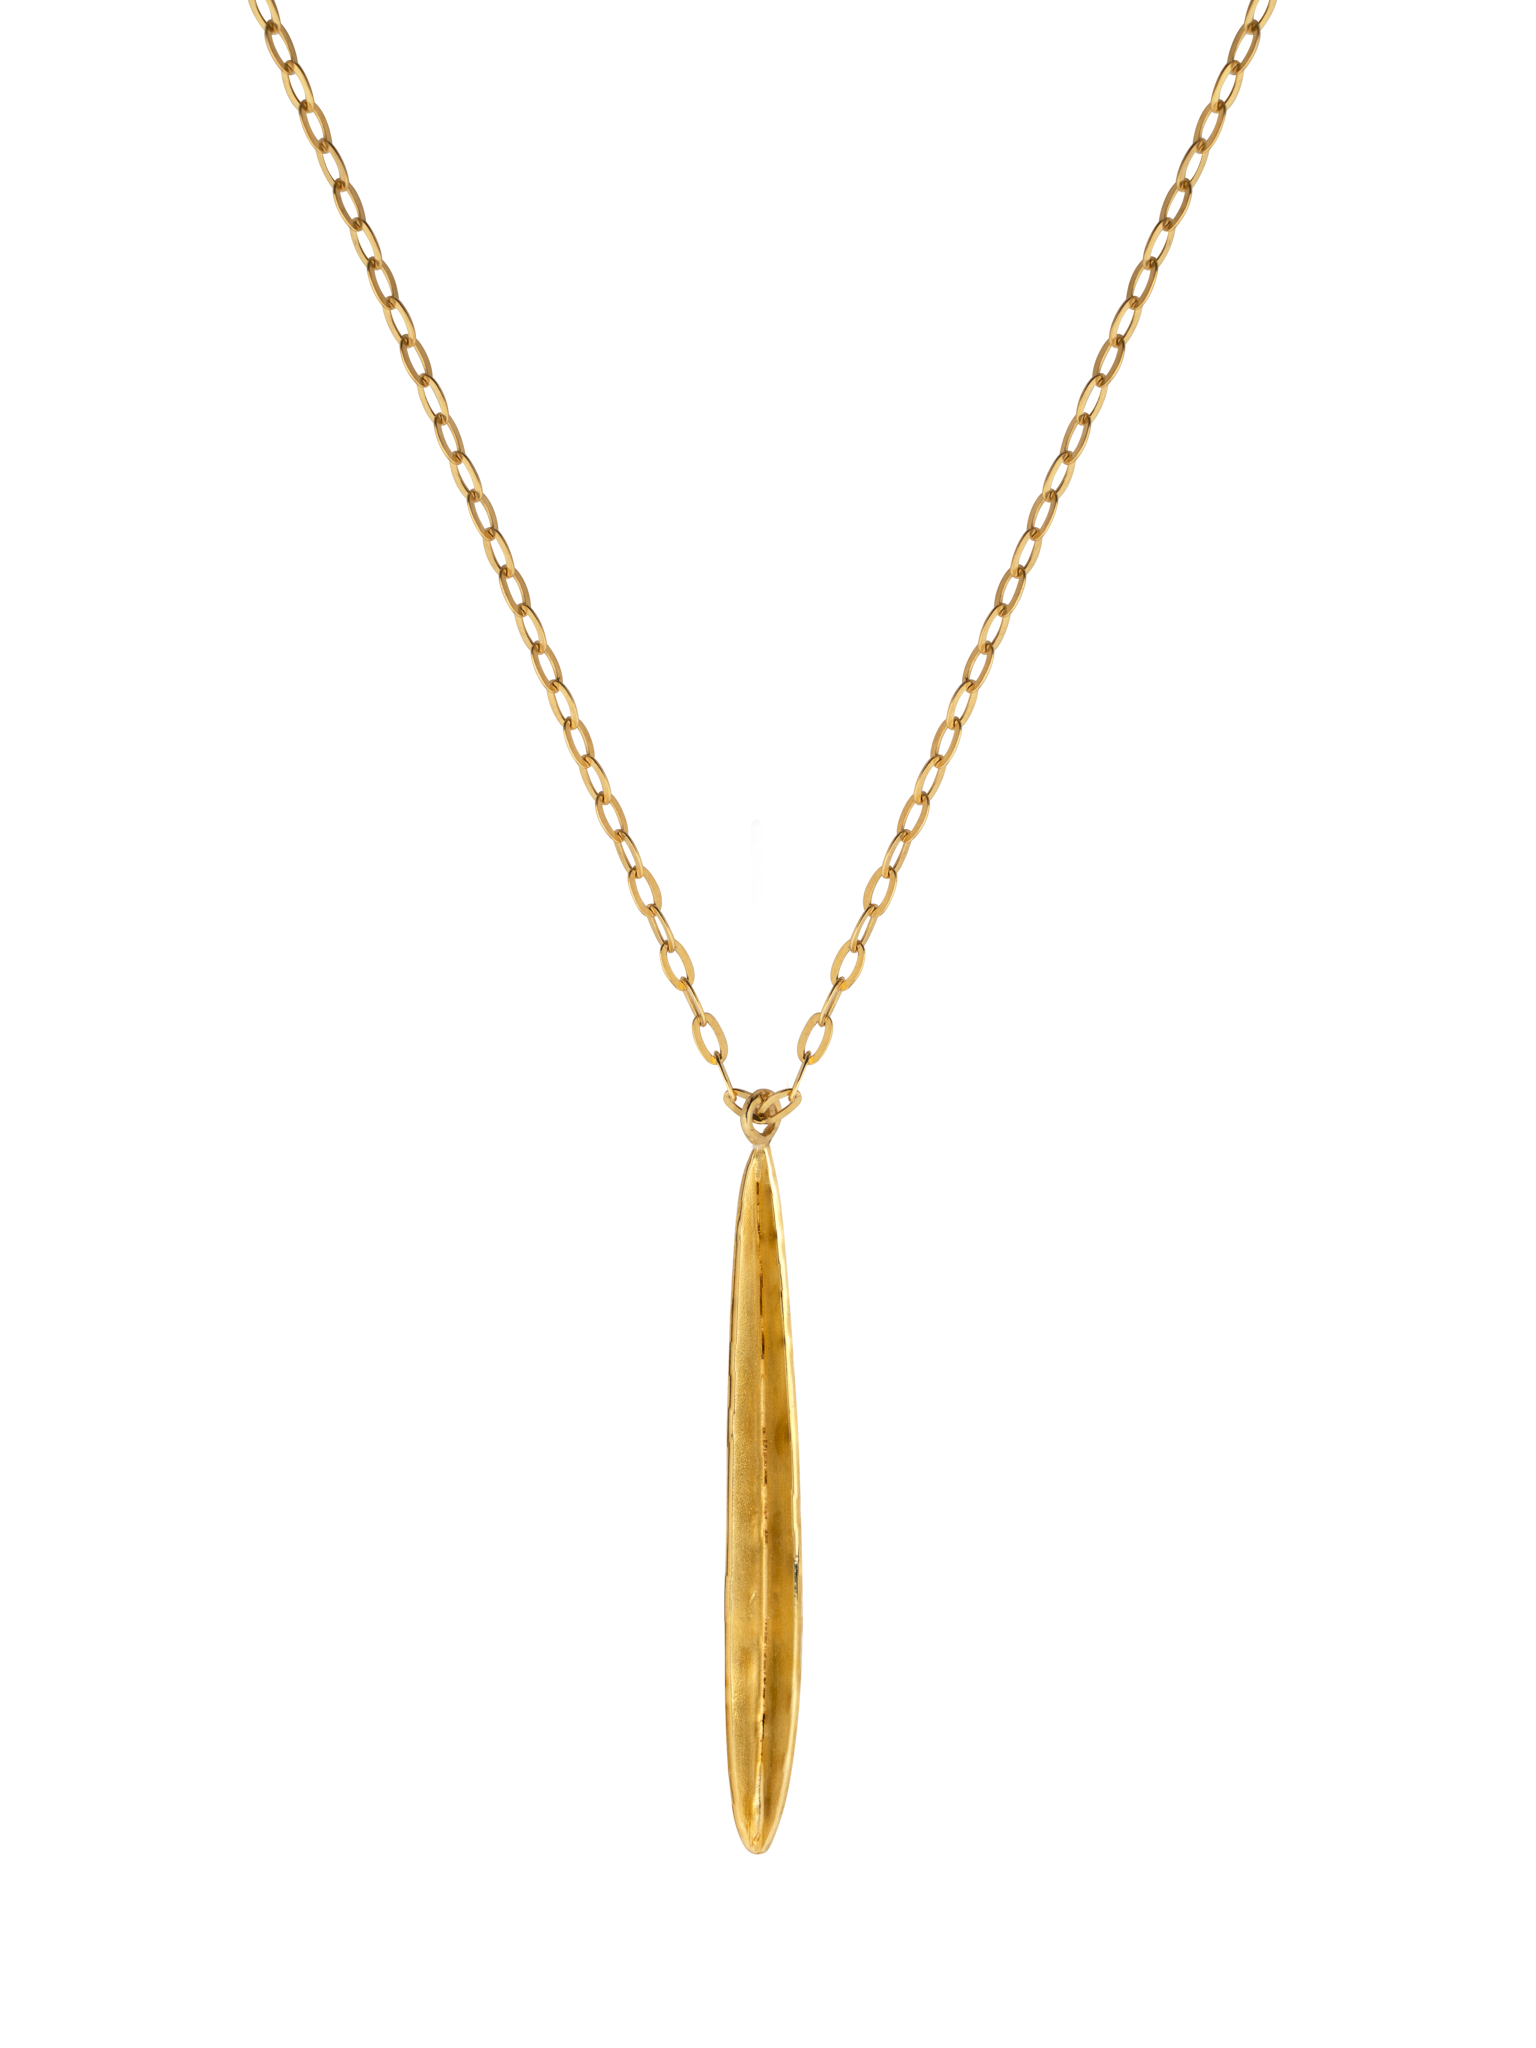 Golden blade of grass necklace 